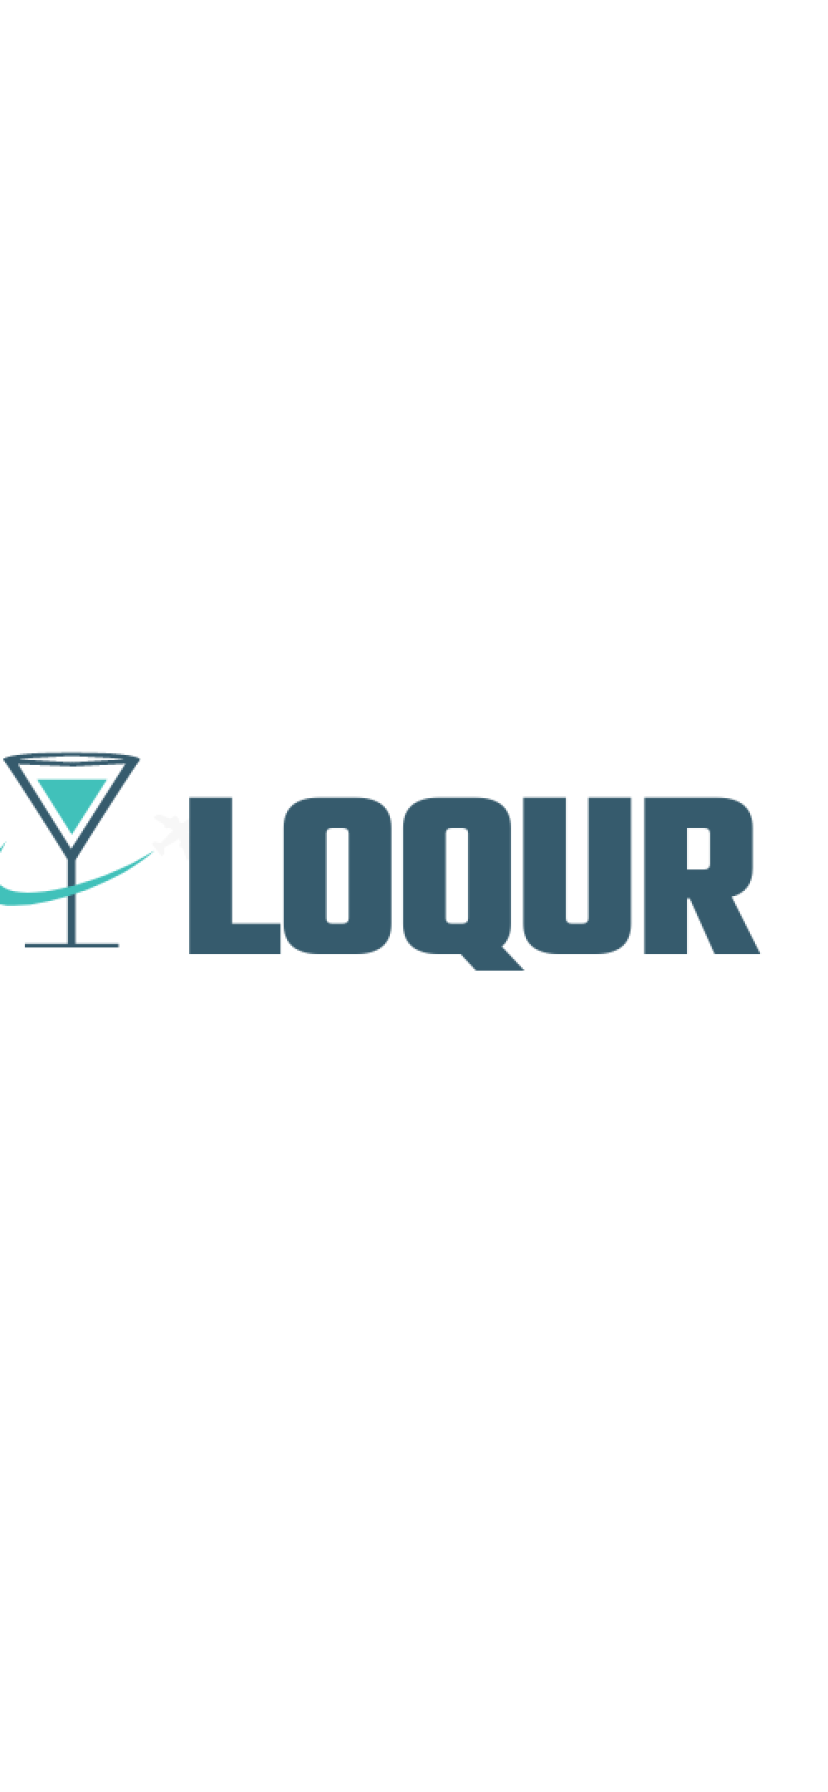 Loqur.com domain name for sale